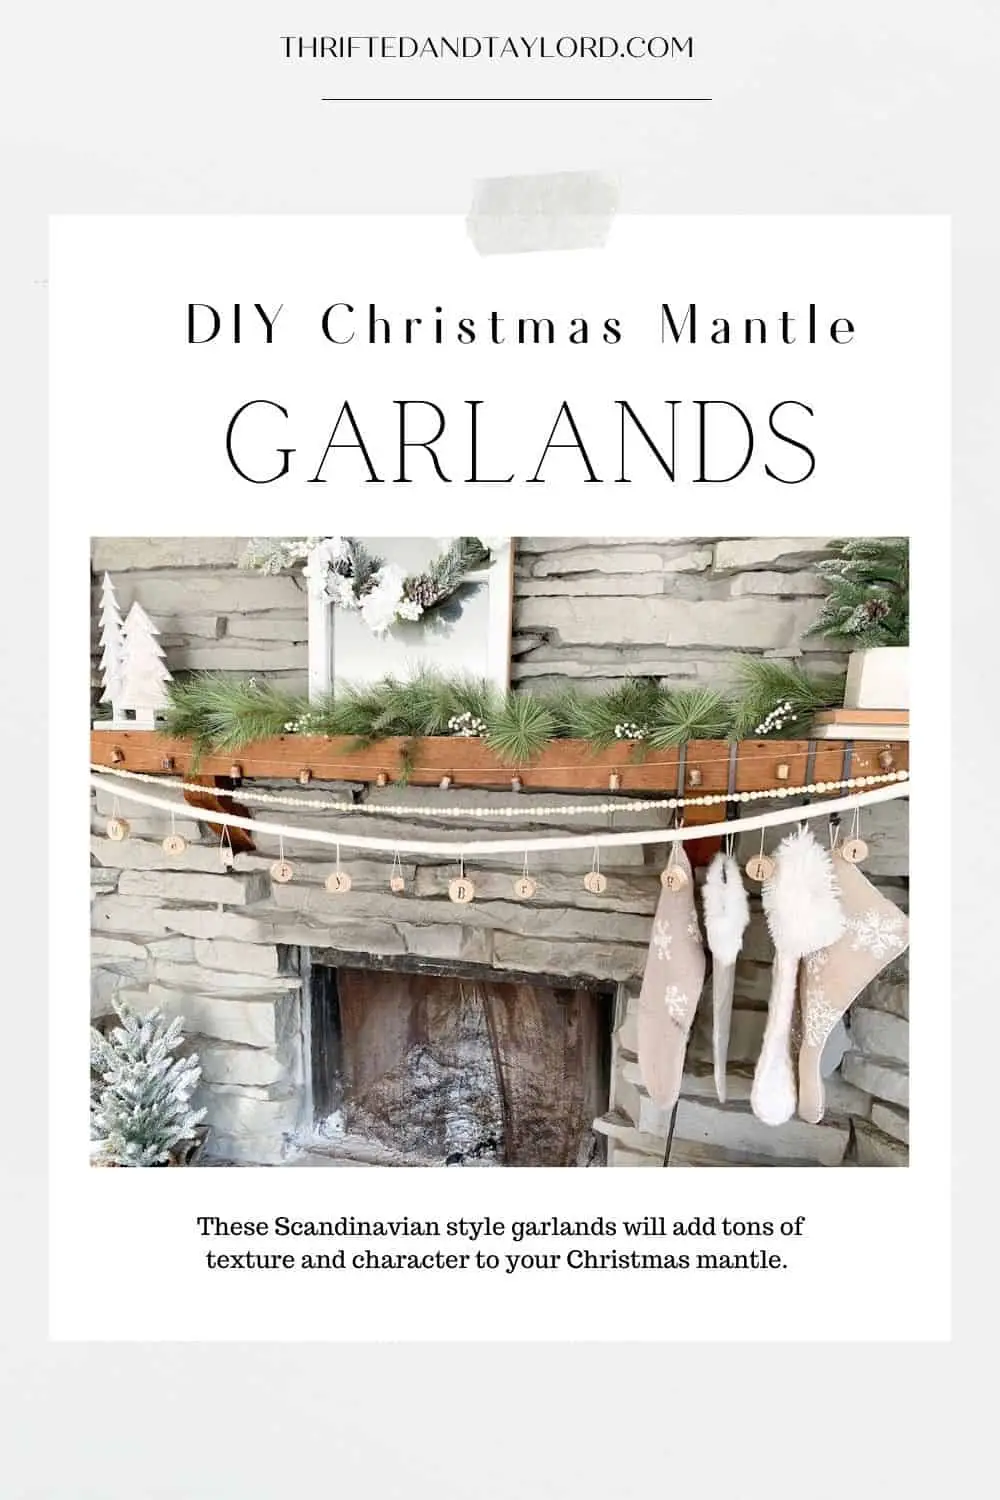 DIY Christmas Mantle Garlands | Scandinavian Christmas Décor